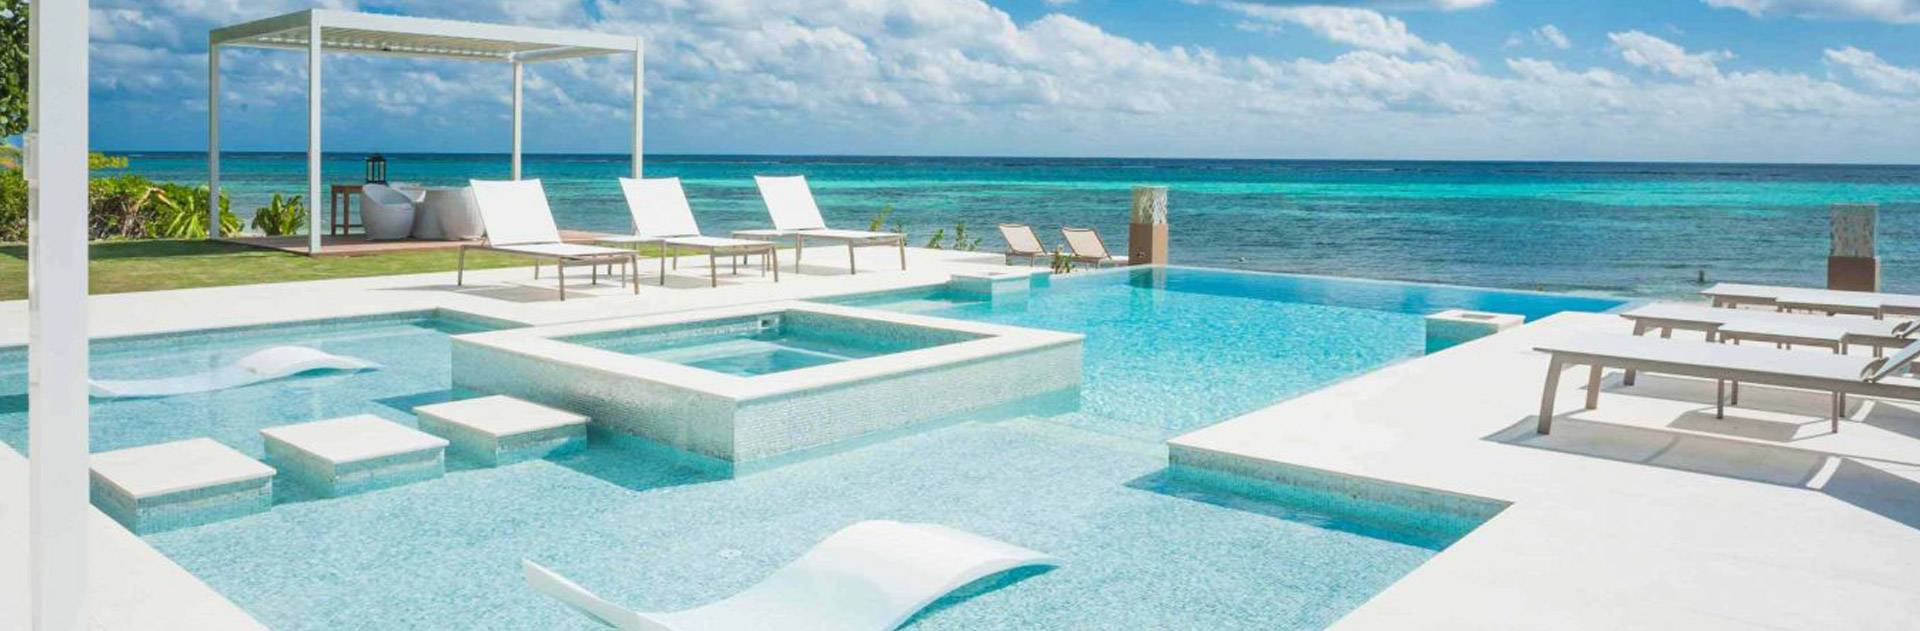 Luxury Villa Cove Cayman Islands 2